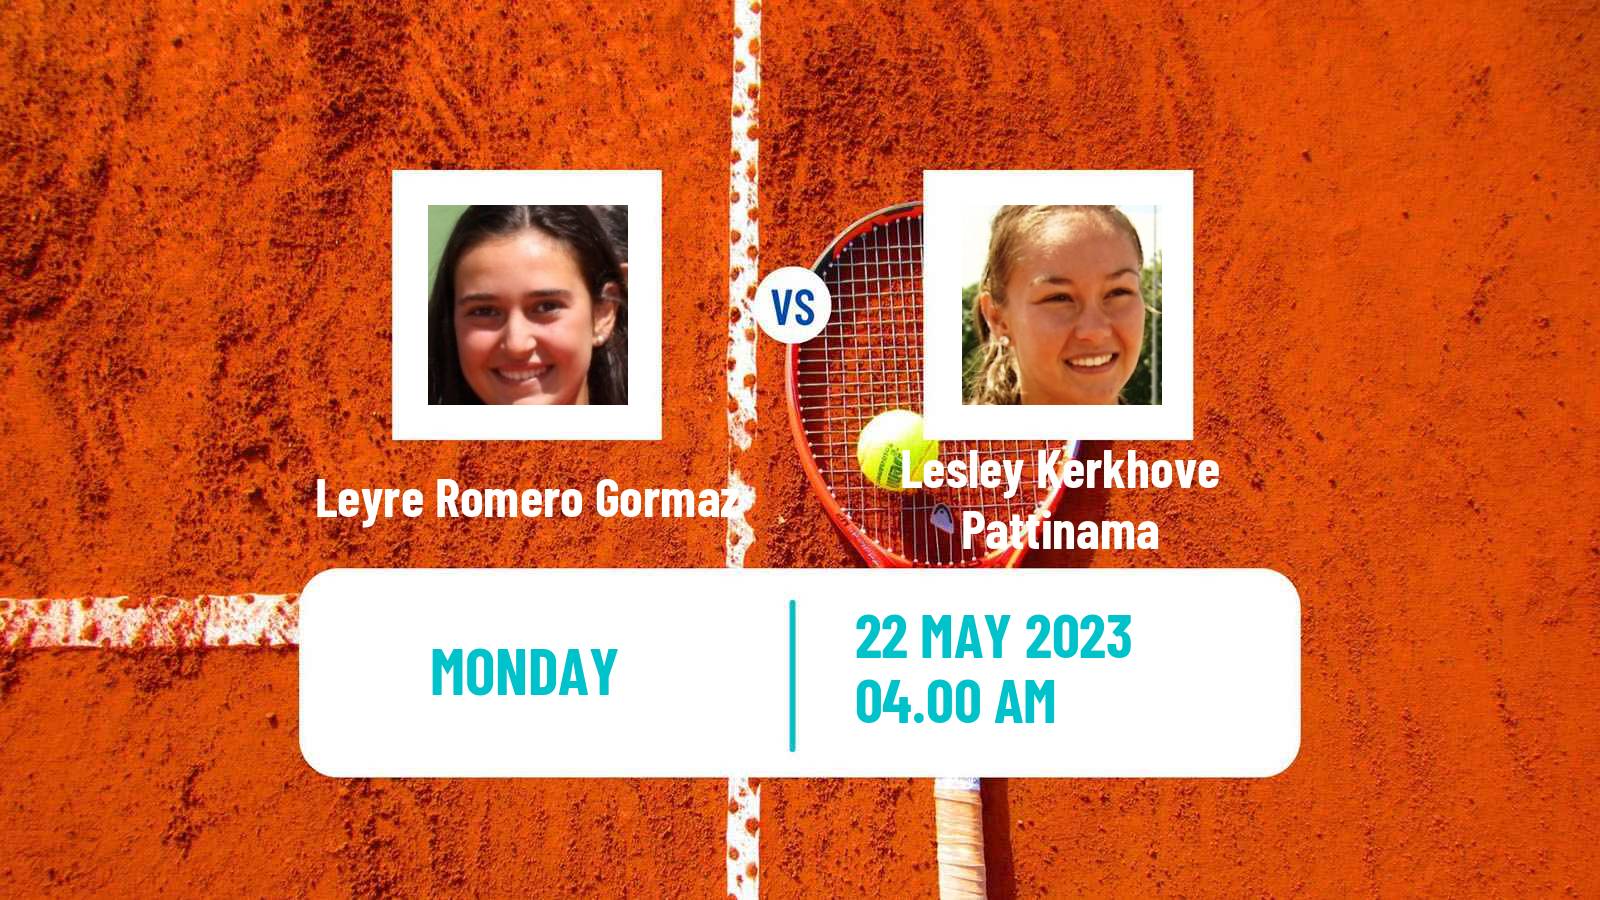 Tennis WTA Roland Garros Leyre Romero Gormaz - Lesley Kerkhove Pattinama